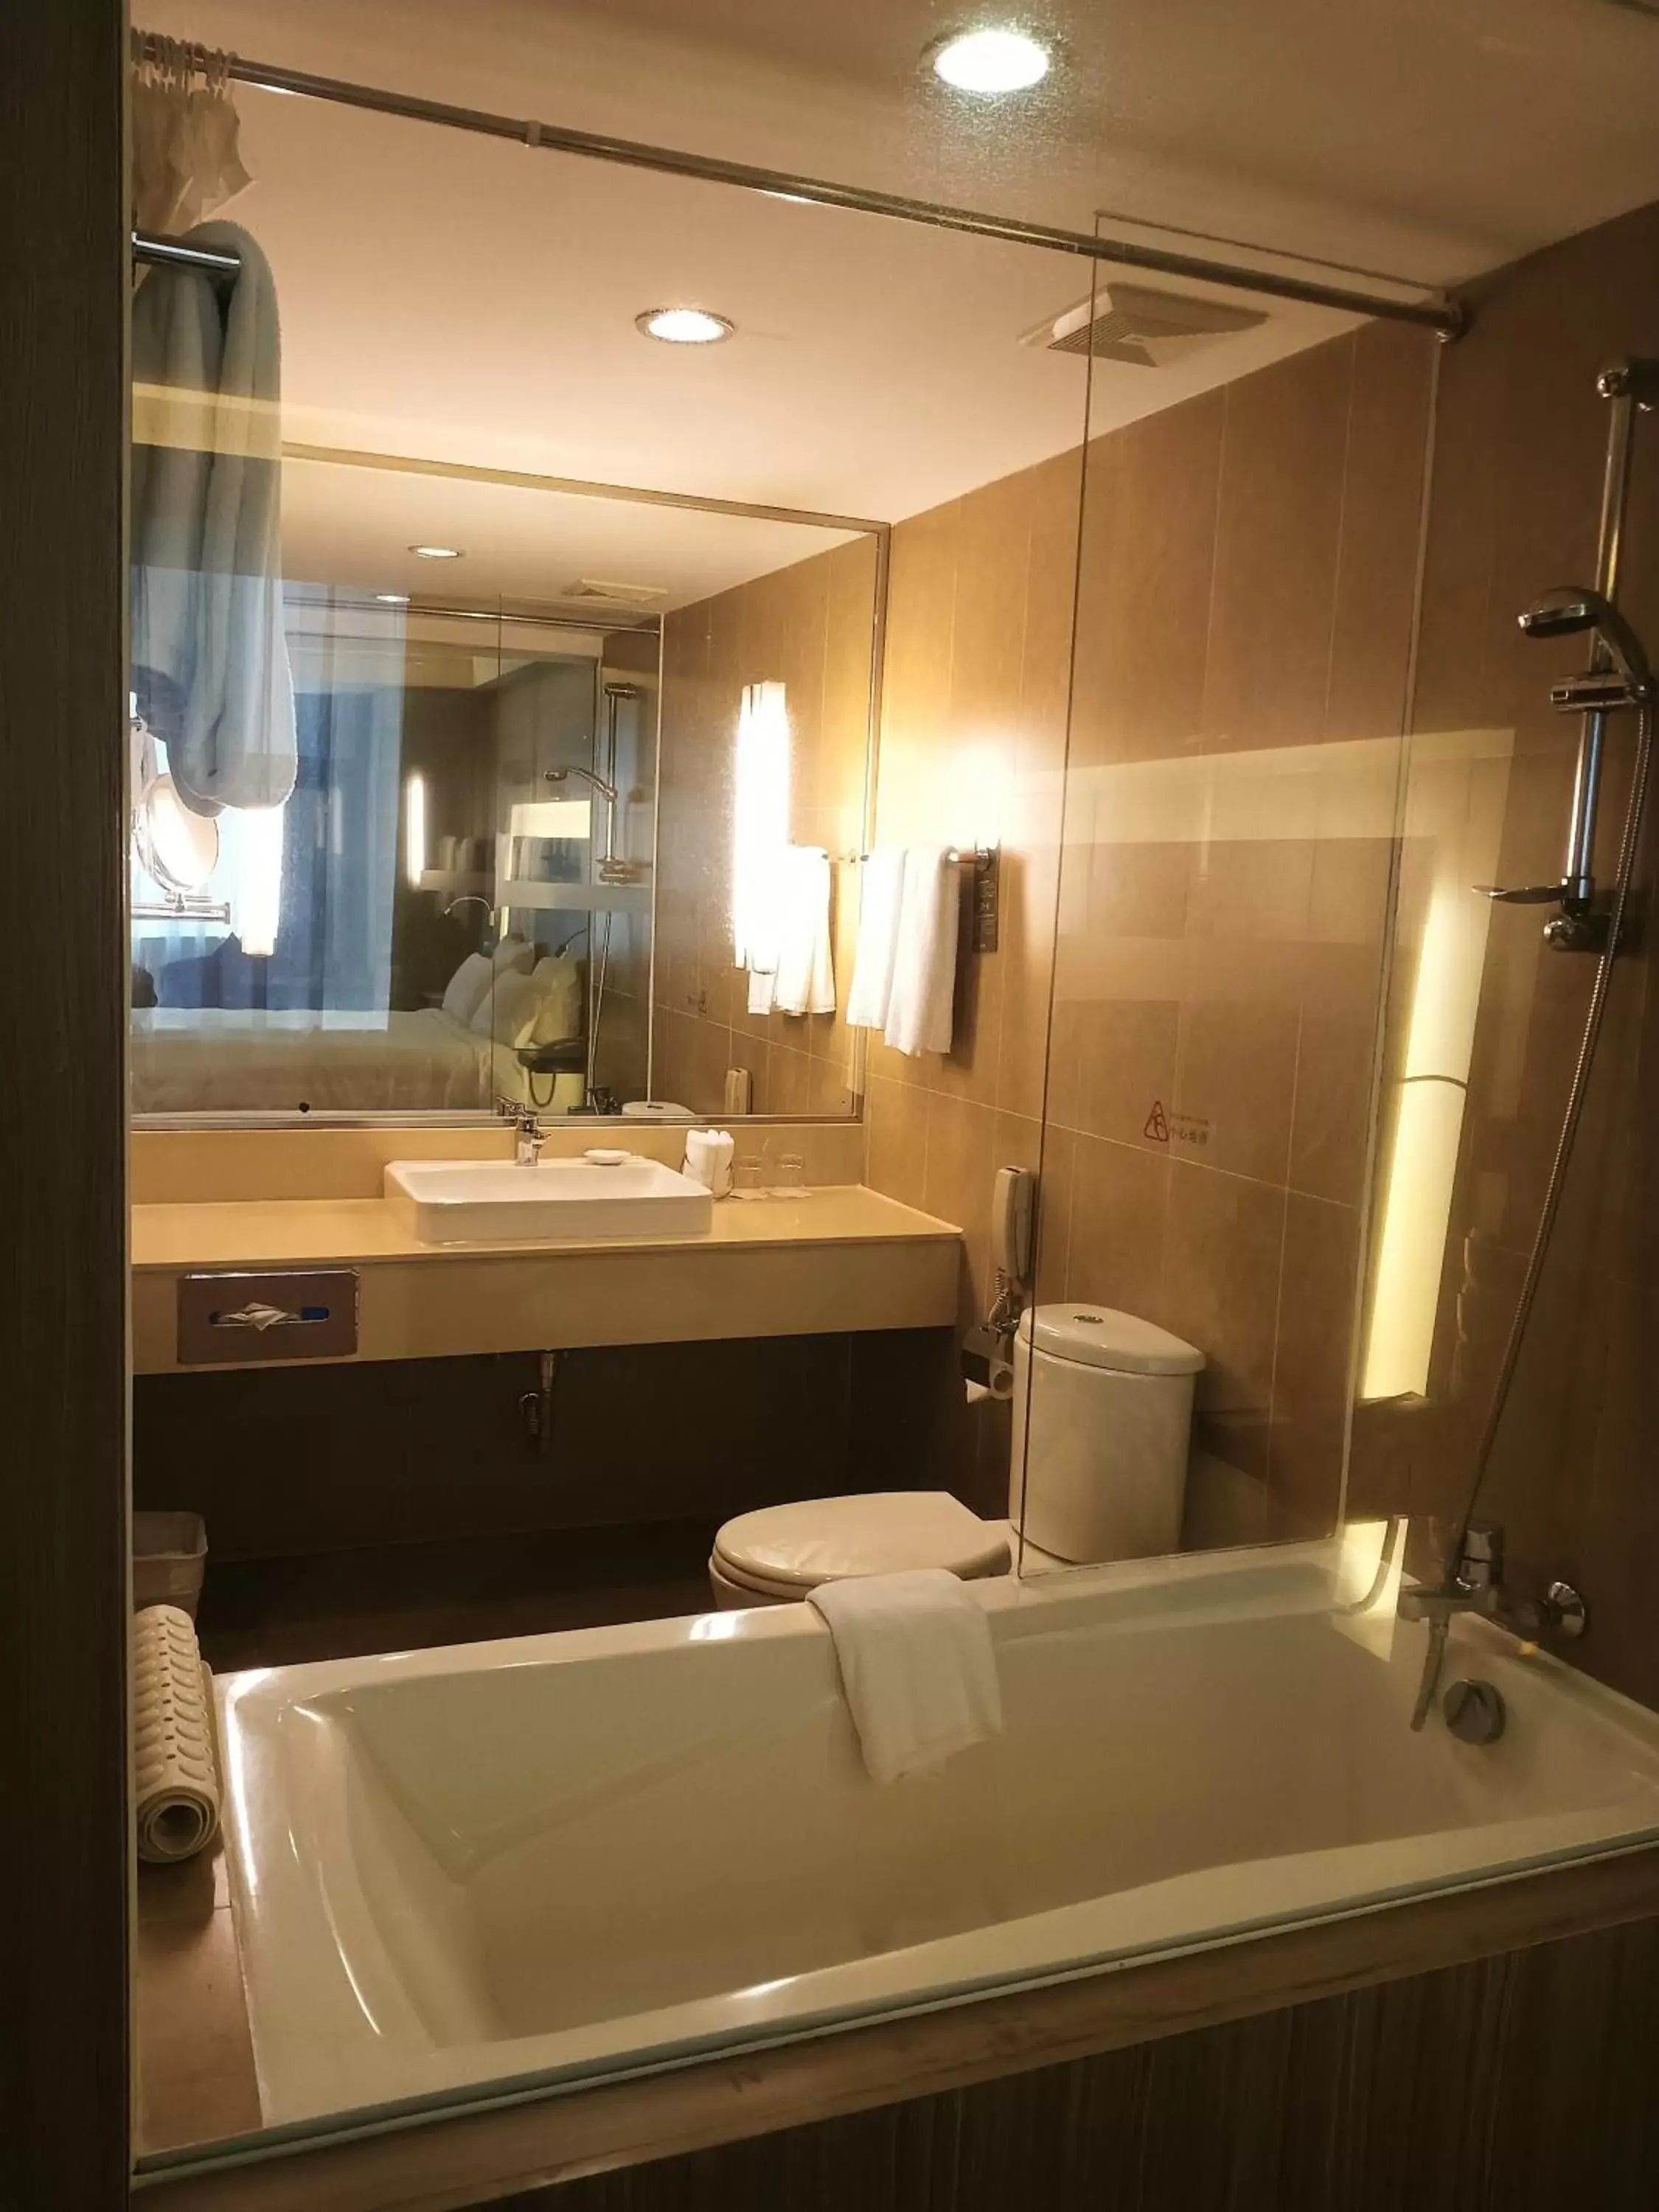 Bathroom in Shenzhen Novotel Watergate(Kingkey 100)